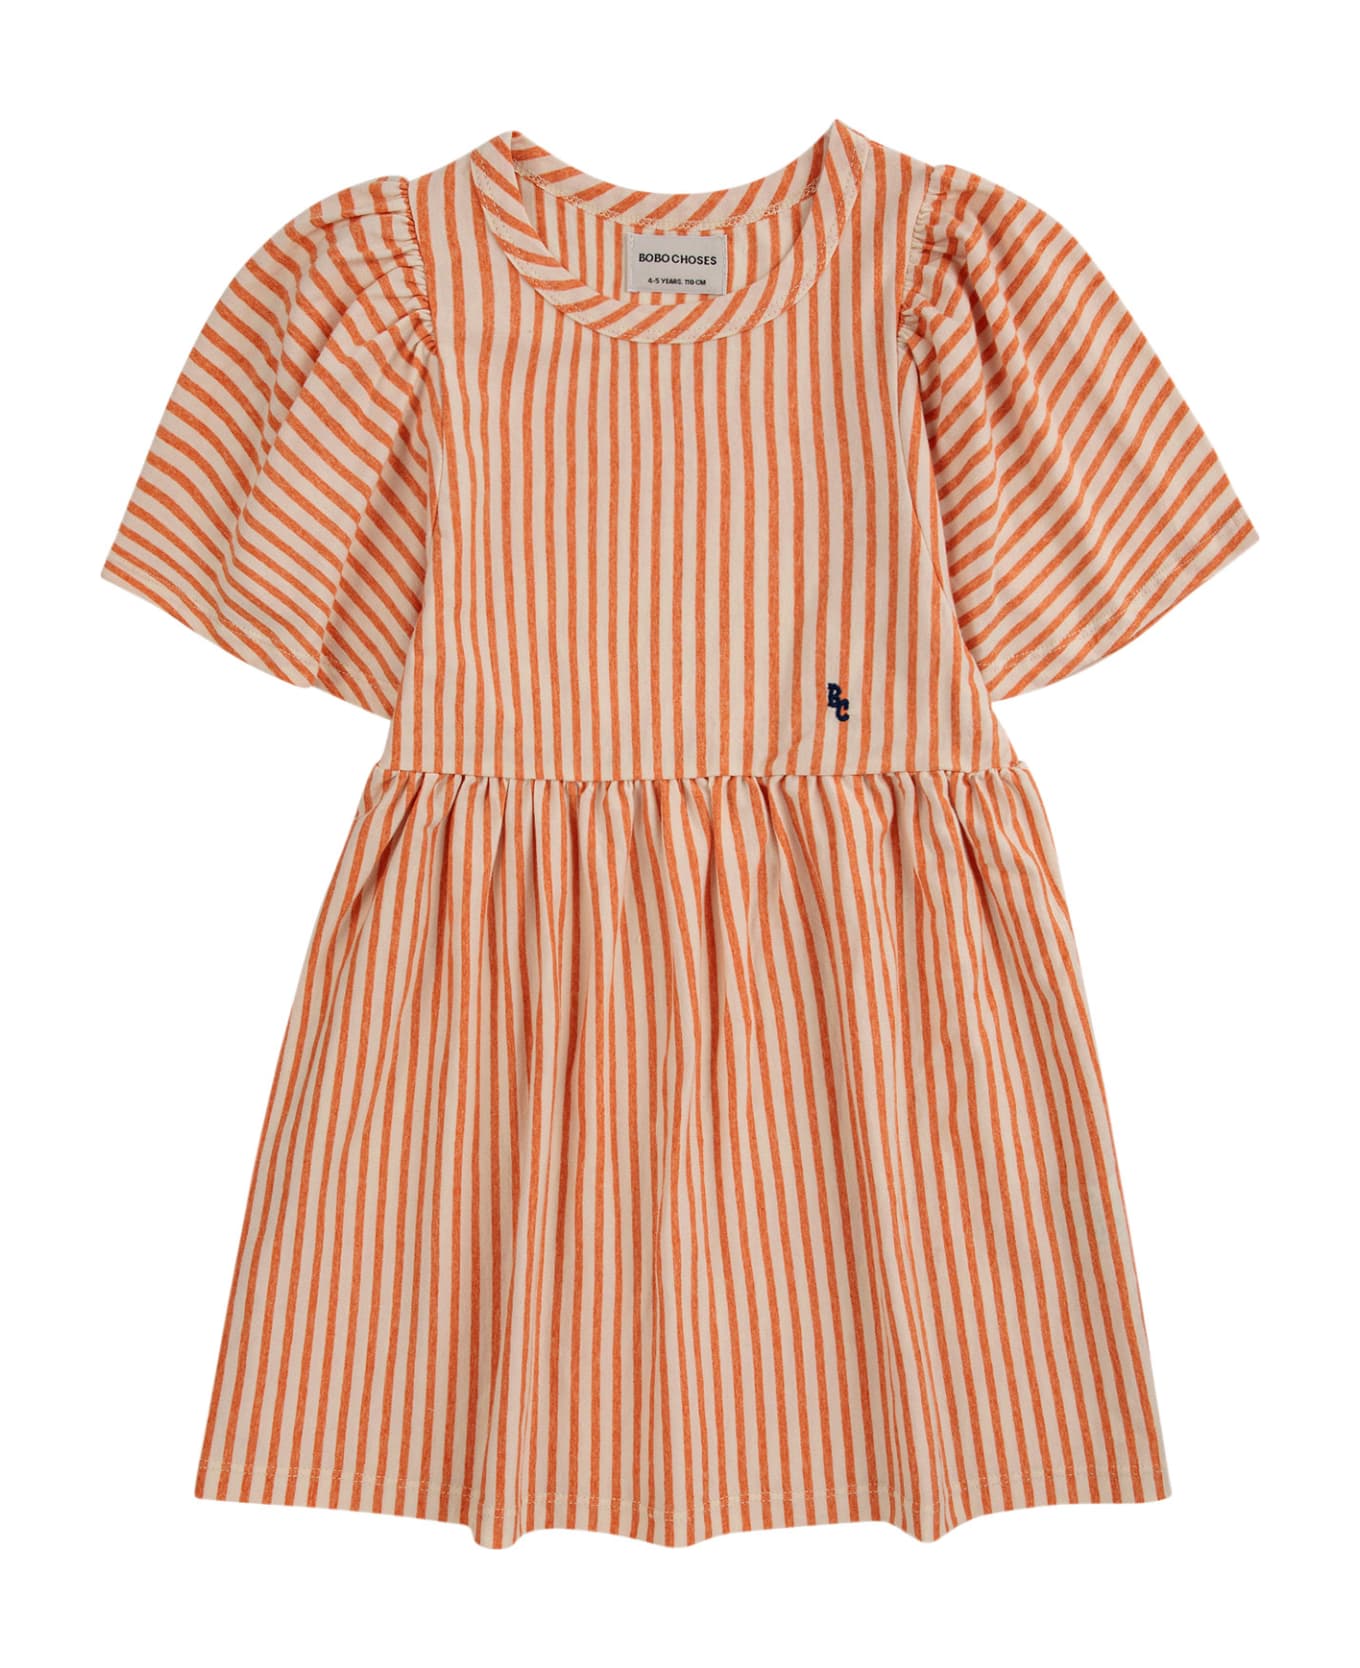 Bobo Choses Orange Dress For Girl With Stripes - Orange